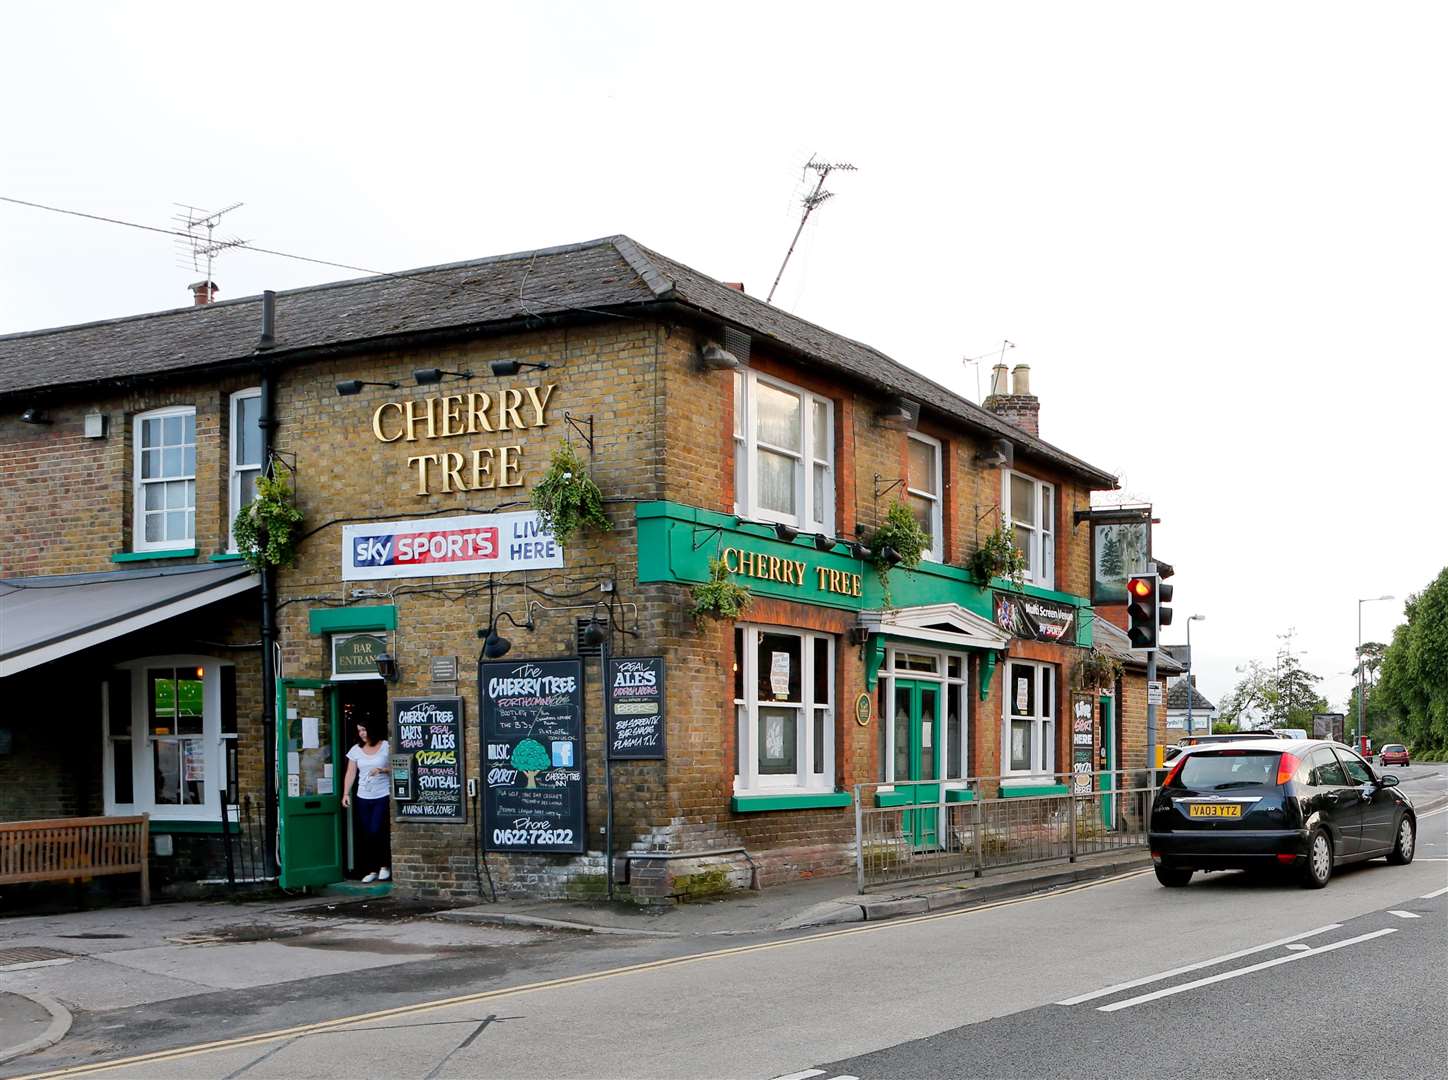 The Cherry Tree Inn in Maidstone